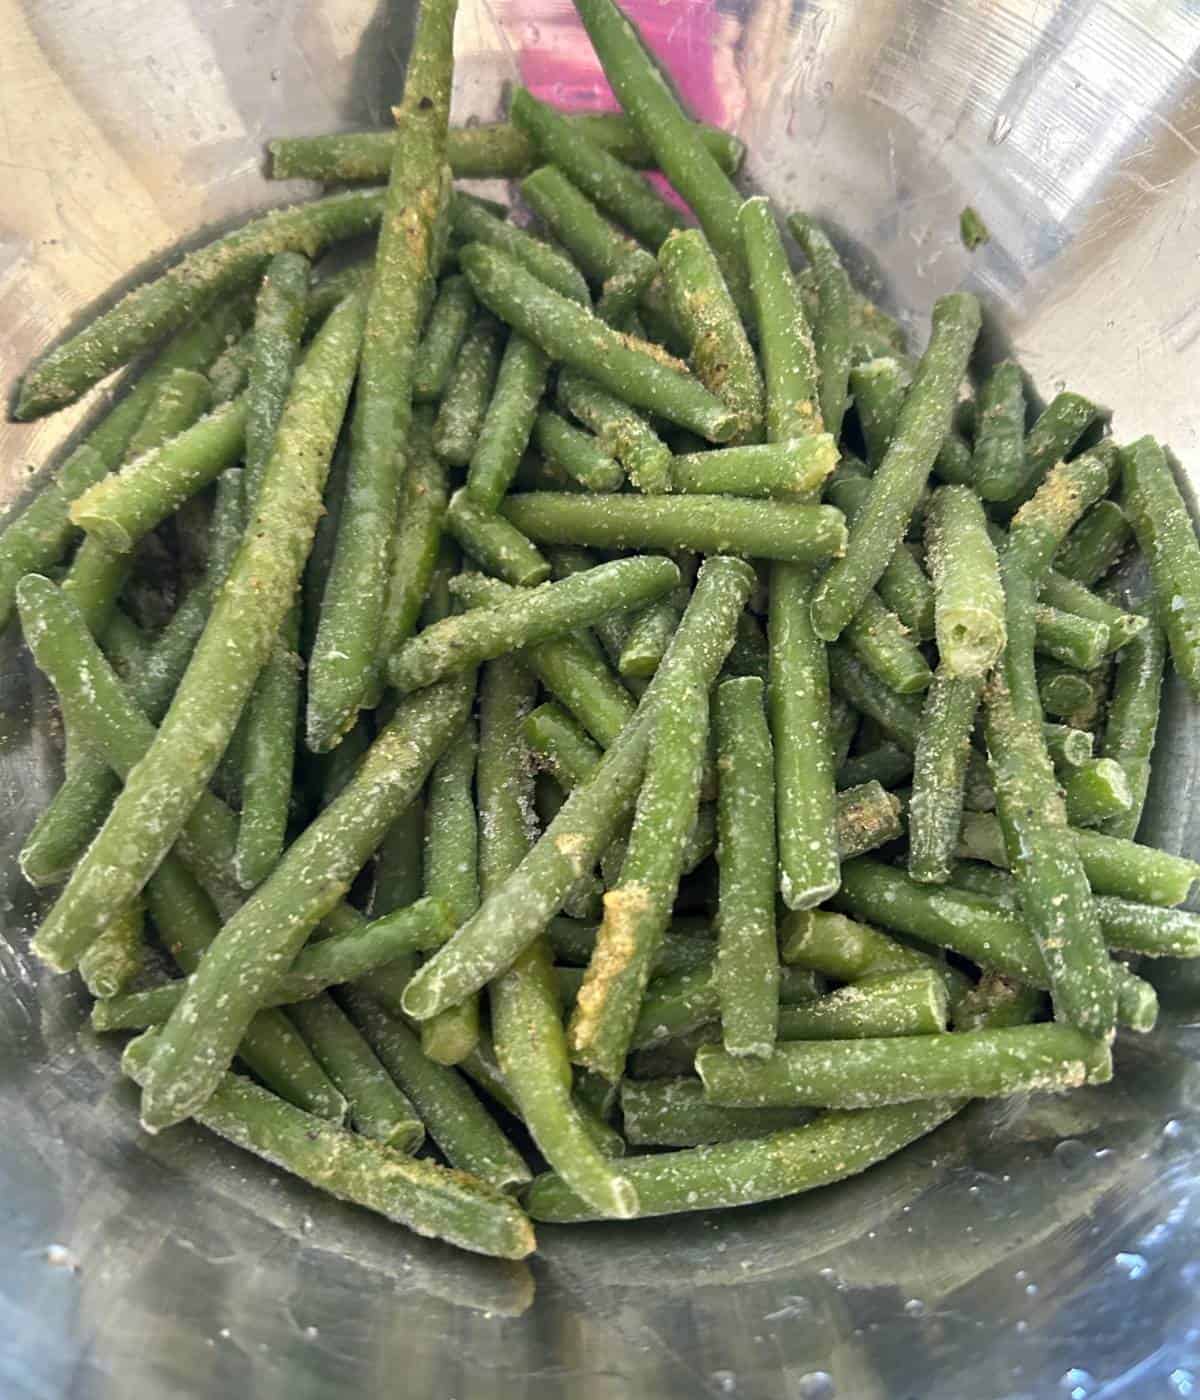 Frozen green beans tossed in seasoning in bowl.